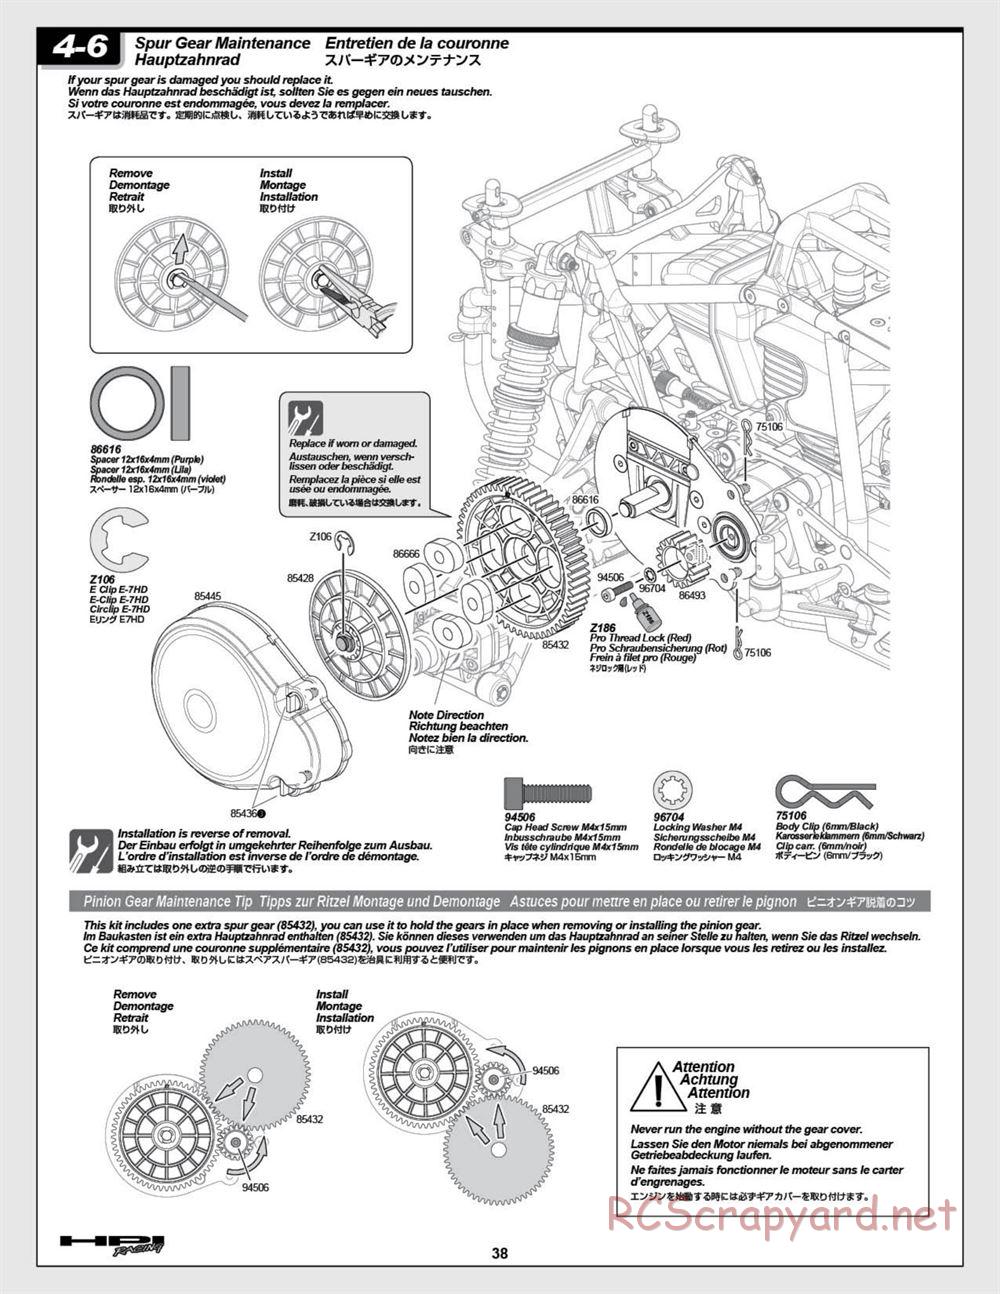 HPI - Baja 5T (2008) - Manual - Page 38